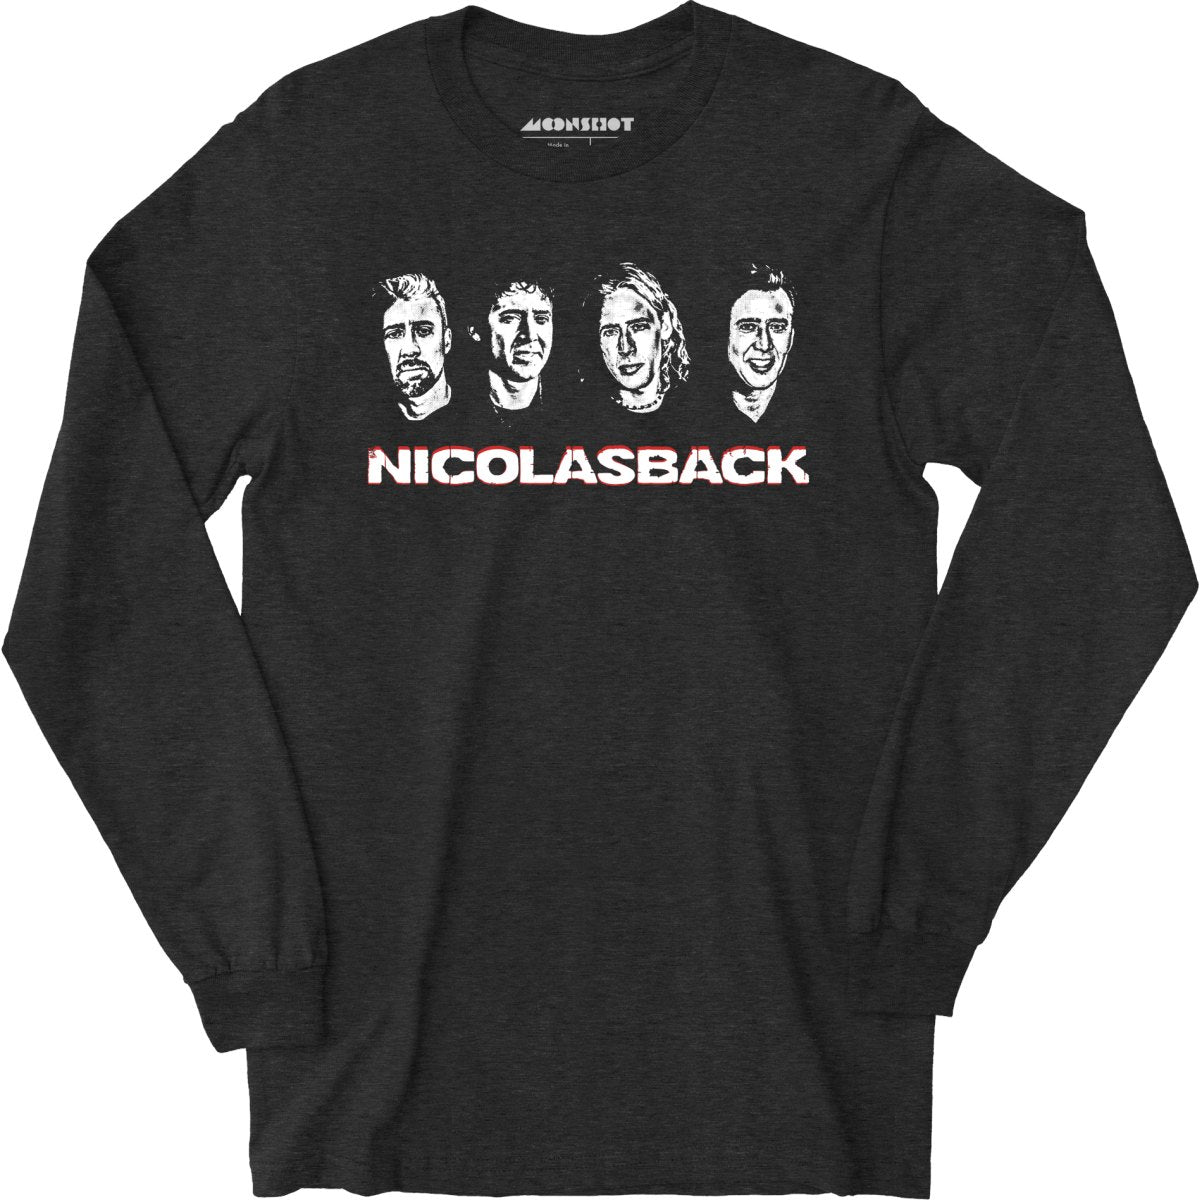 Nicolasback - Nickelback Nicolas Cage Mashup - Long Sleeve T-Shirt